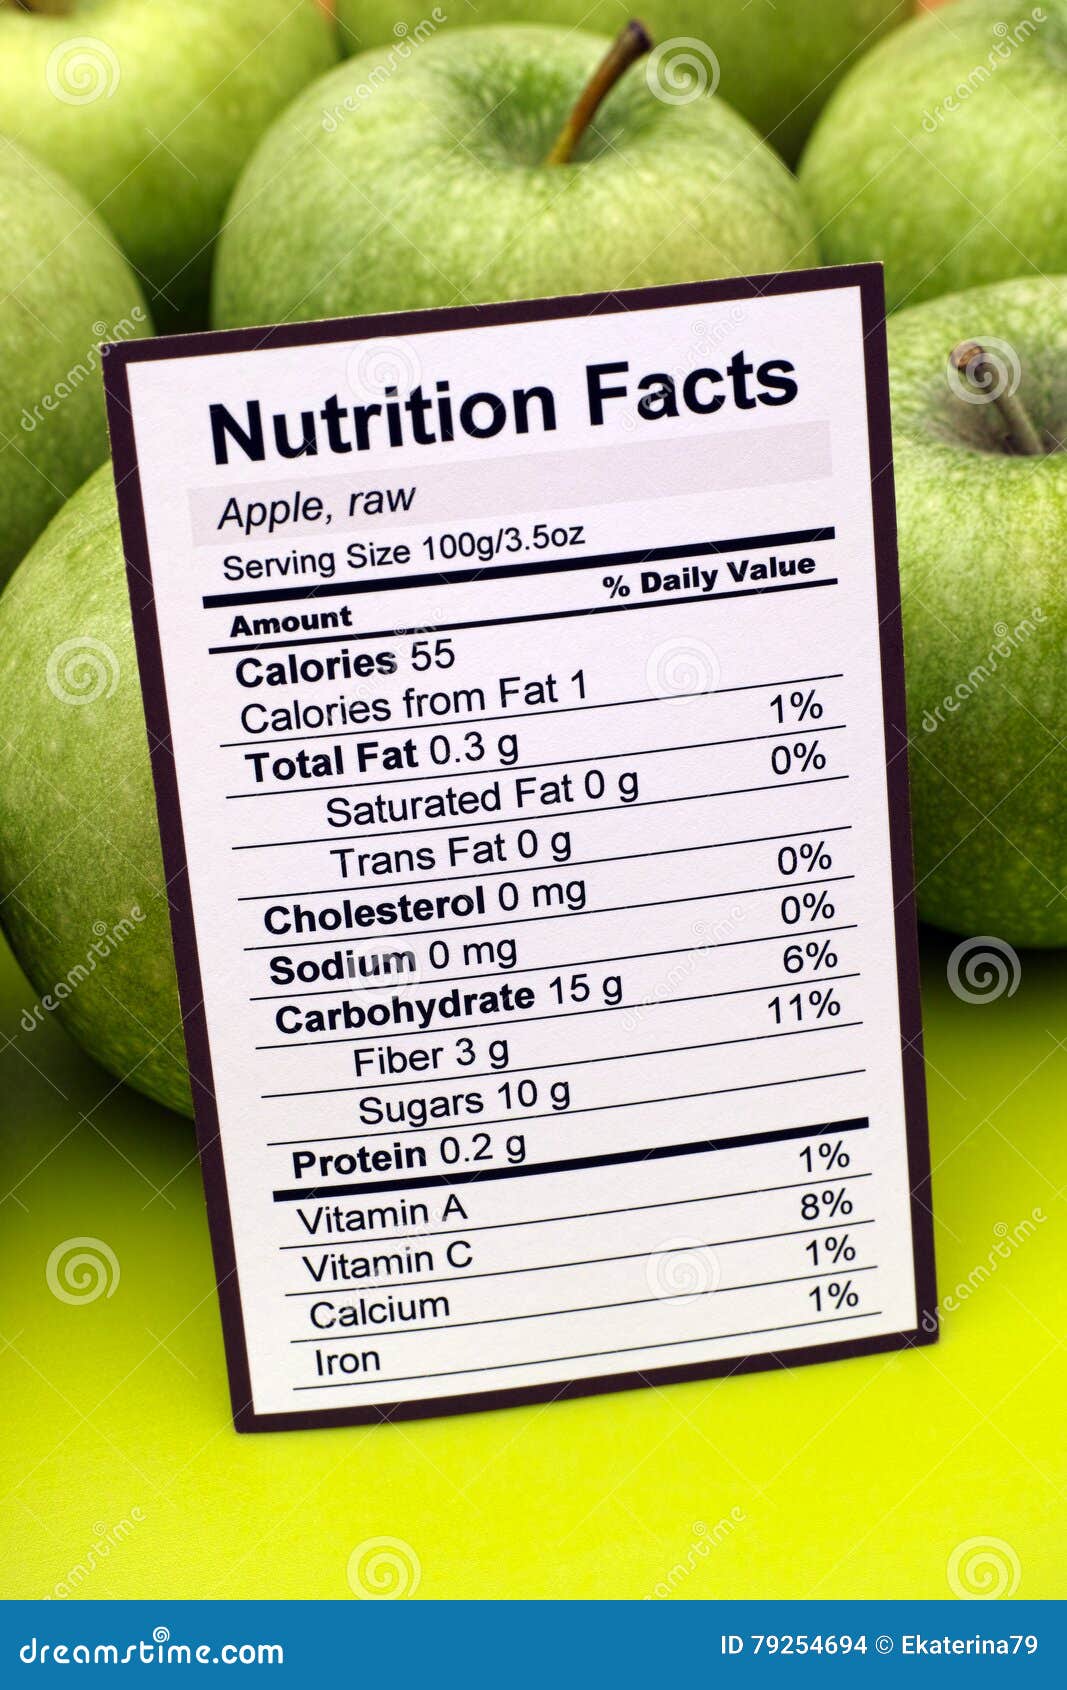 Калорийность зеленого яблока на 100 грамм